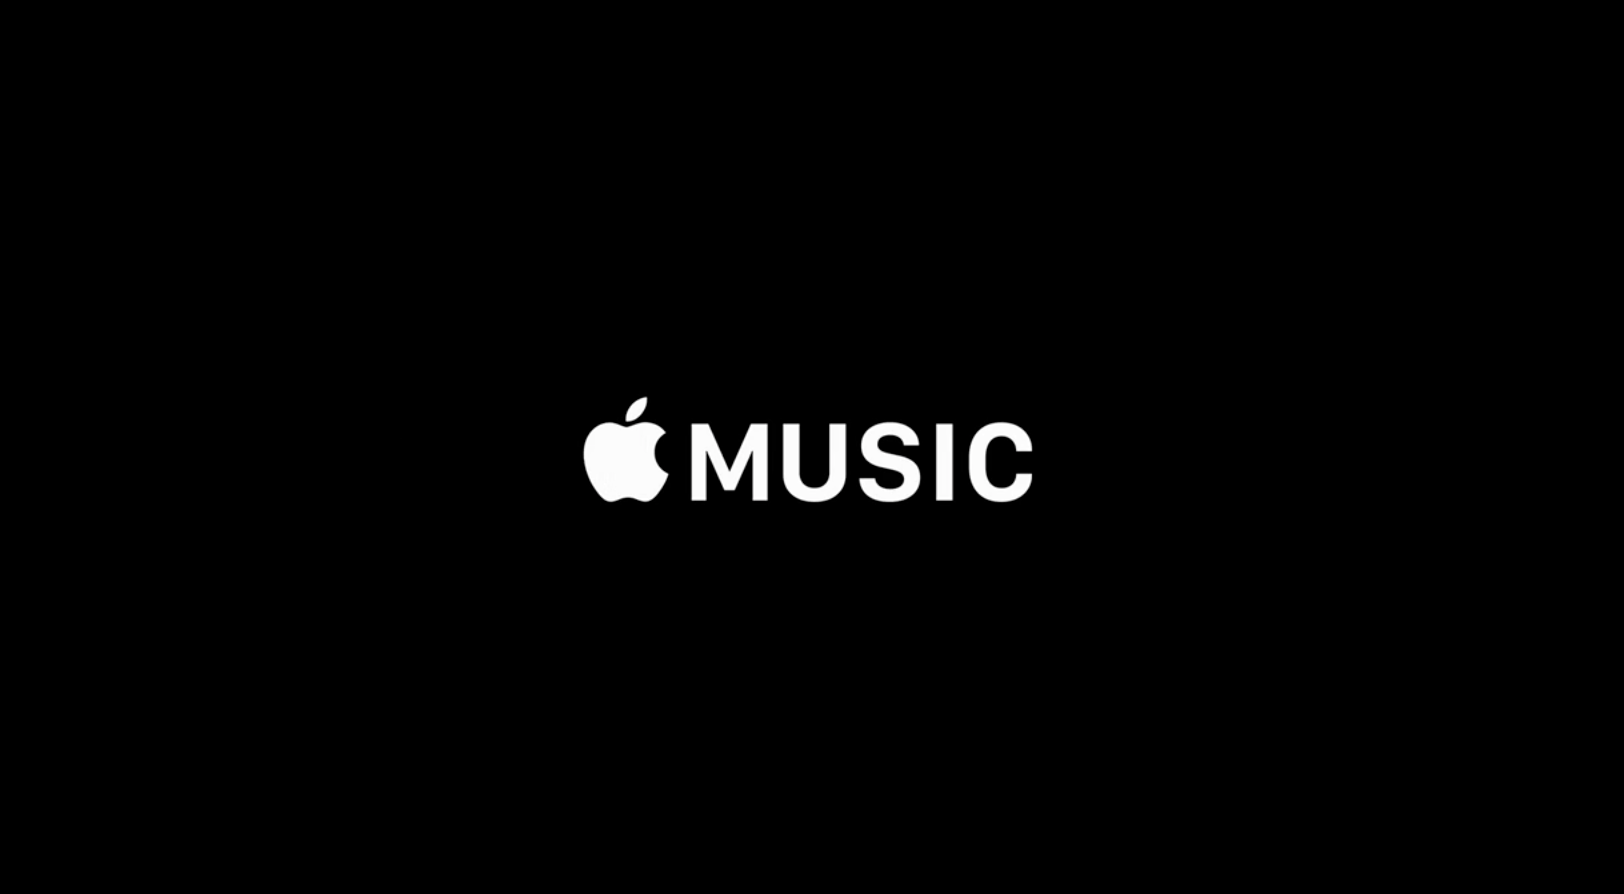 Apple ยืนยัน Apple Music จะยอมให้โหลดเพลงมาฟังแบบ Offline ได้